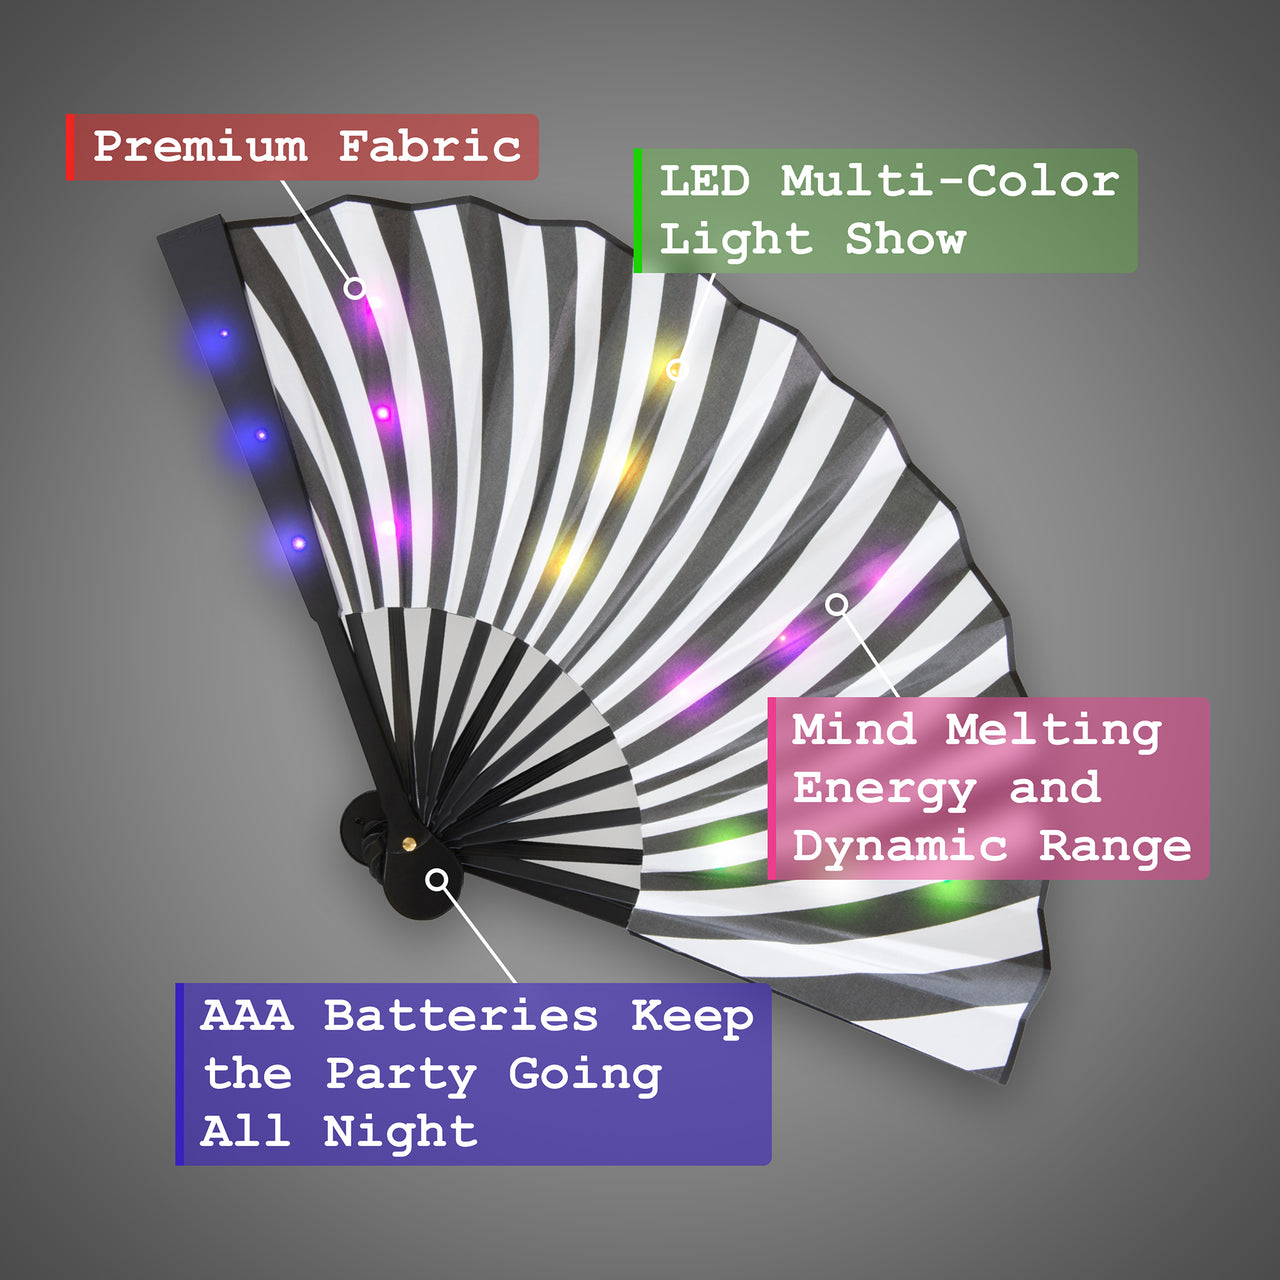 LED Hand Fan - "Black & White Swirl" Compact & Foldable Design - Hypnotic Trance Design